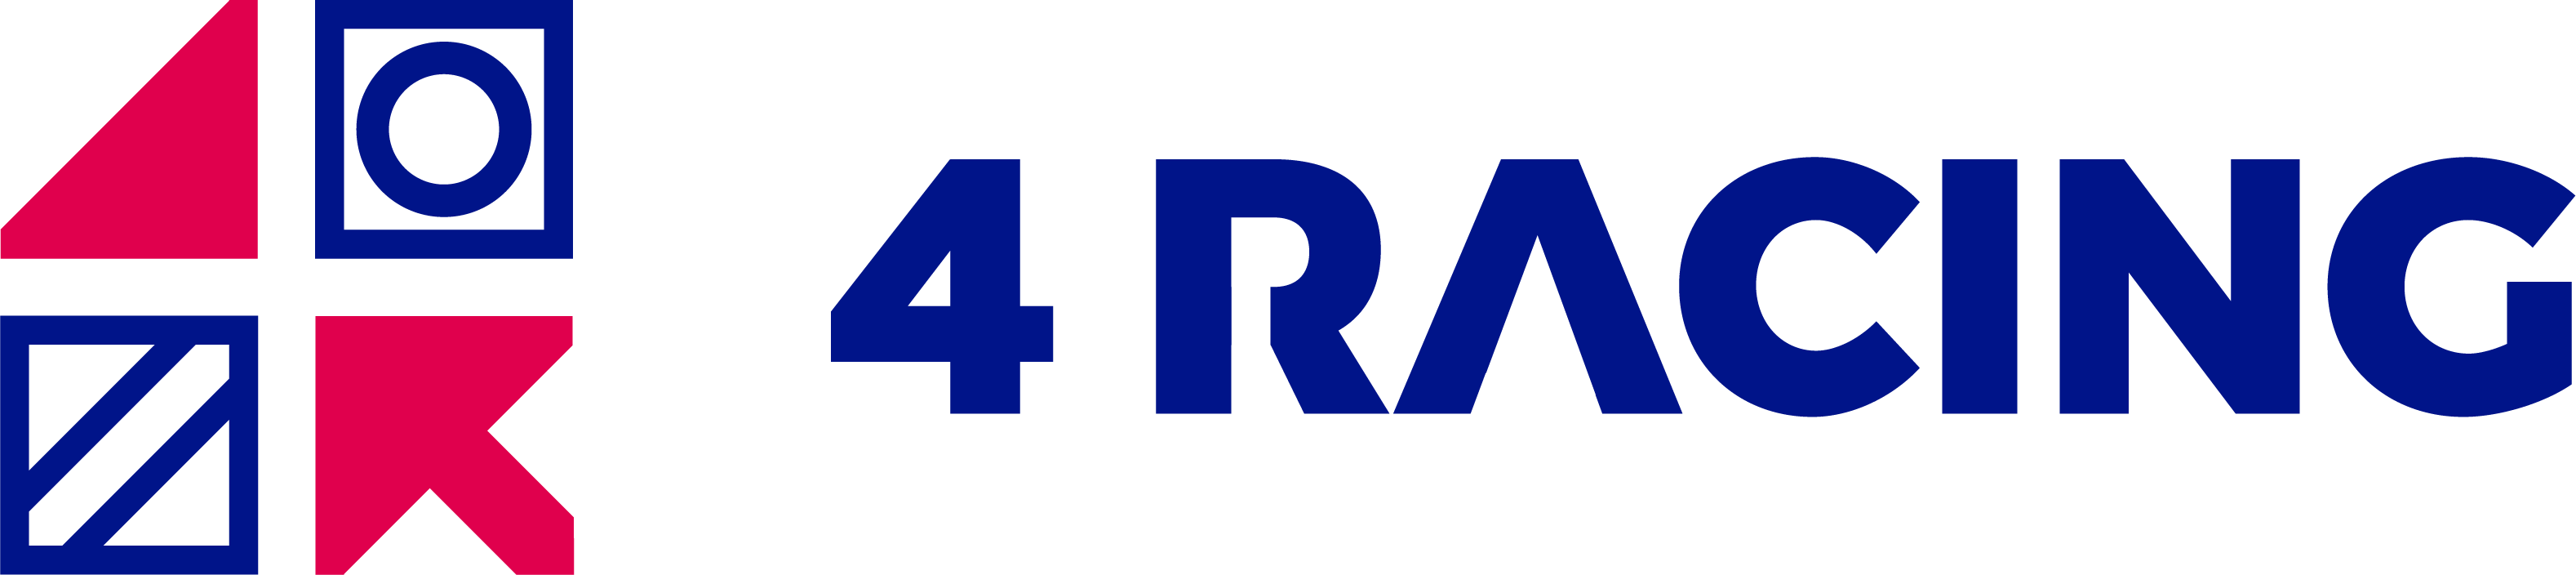 Tab4racing Logo